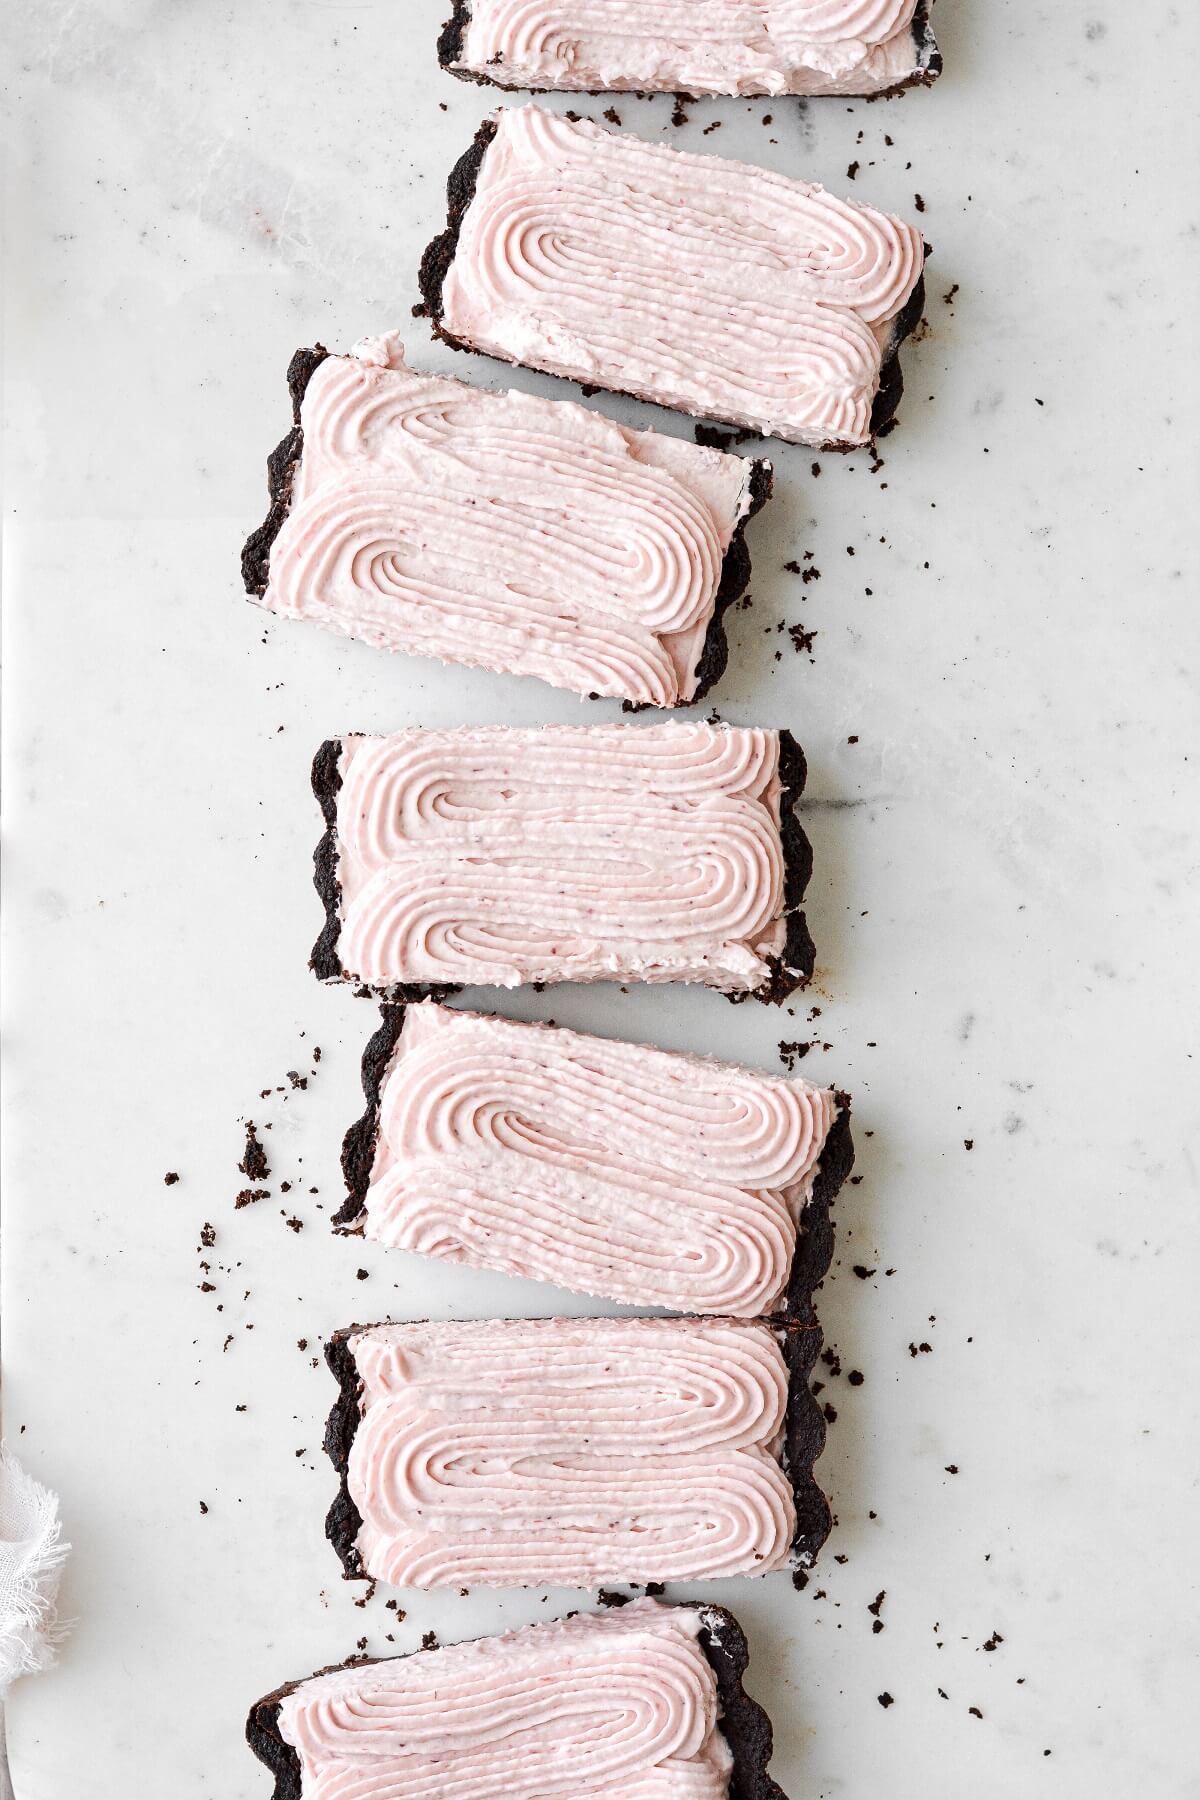 Strawberry rhubarb cream tart with a chocolate shortbread crust, cut into slices on a marble slab.